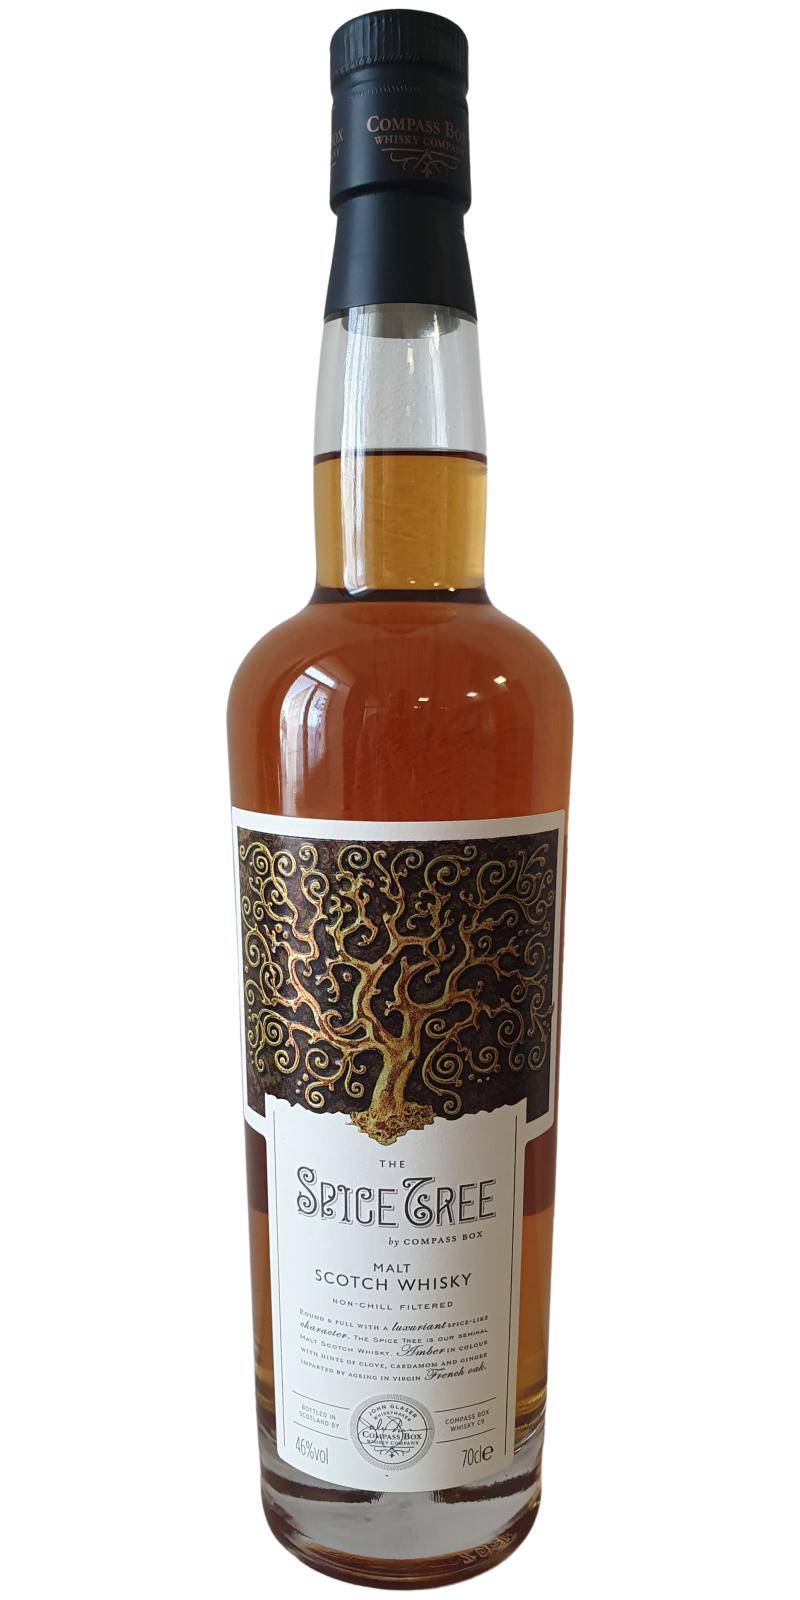 Spice Tree The Signature Range CB Malt Scotch Whisky French oak heads + American oak bodies 46% 700ml